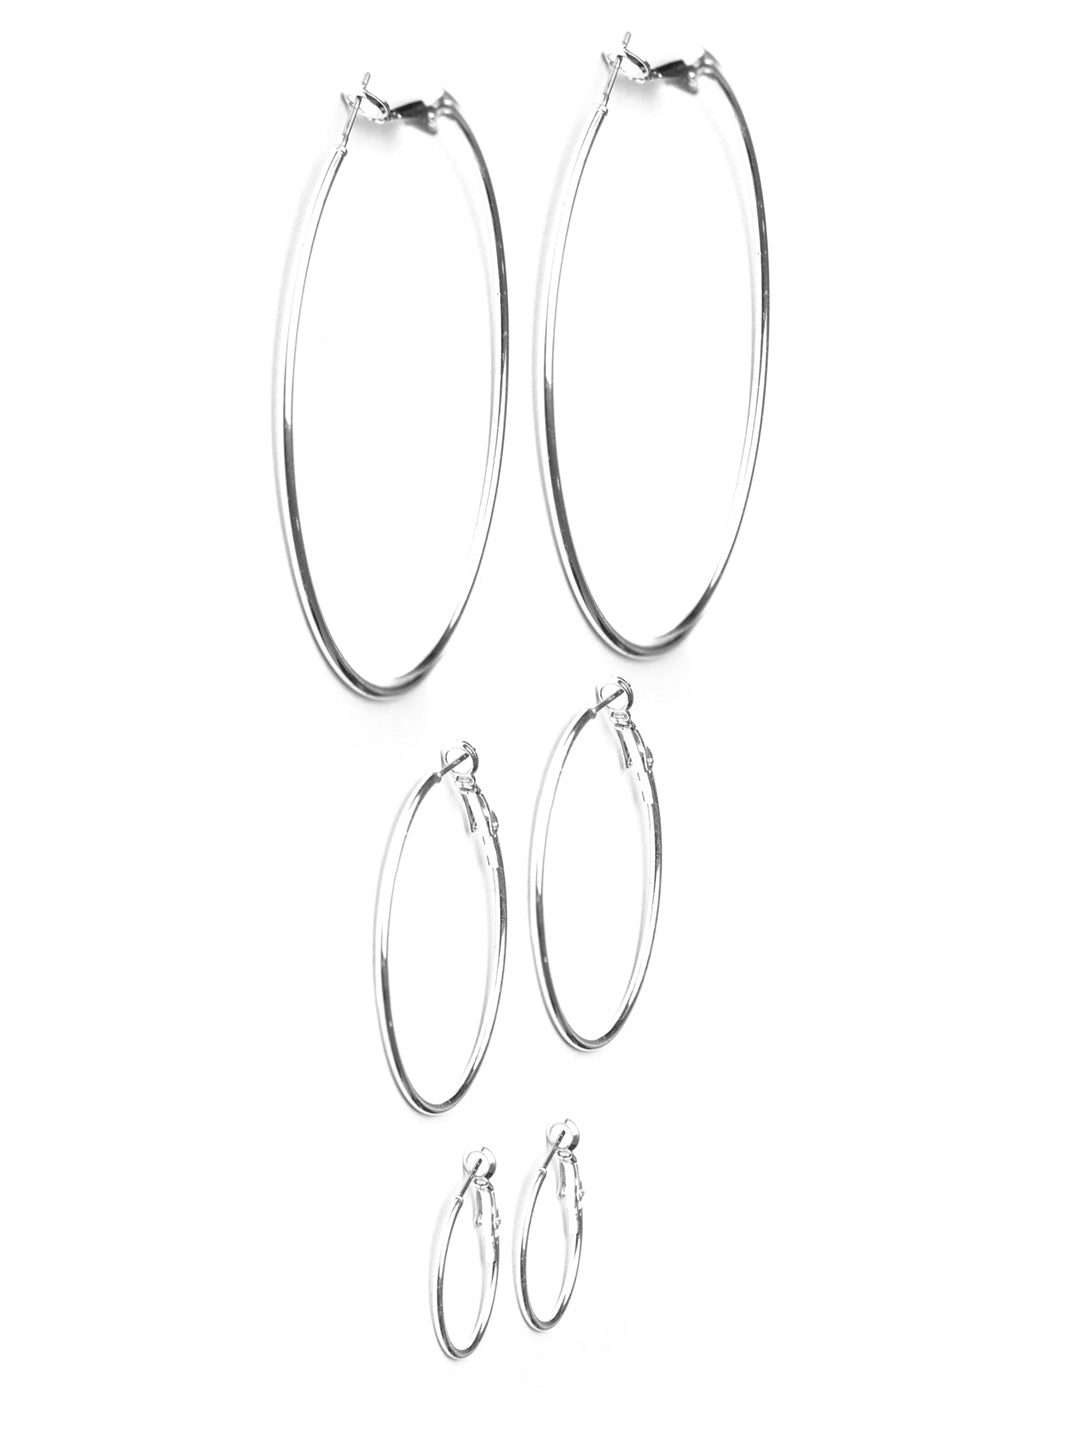 Classic Silver Plated Hoop Earrings Set of 3